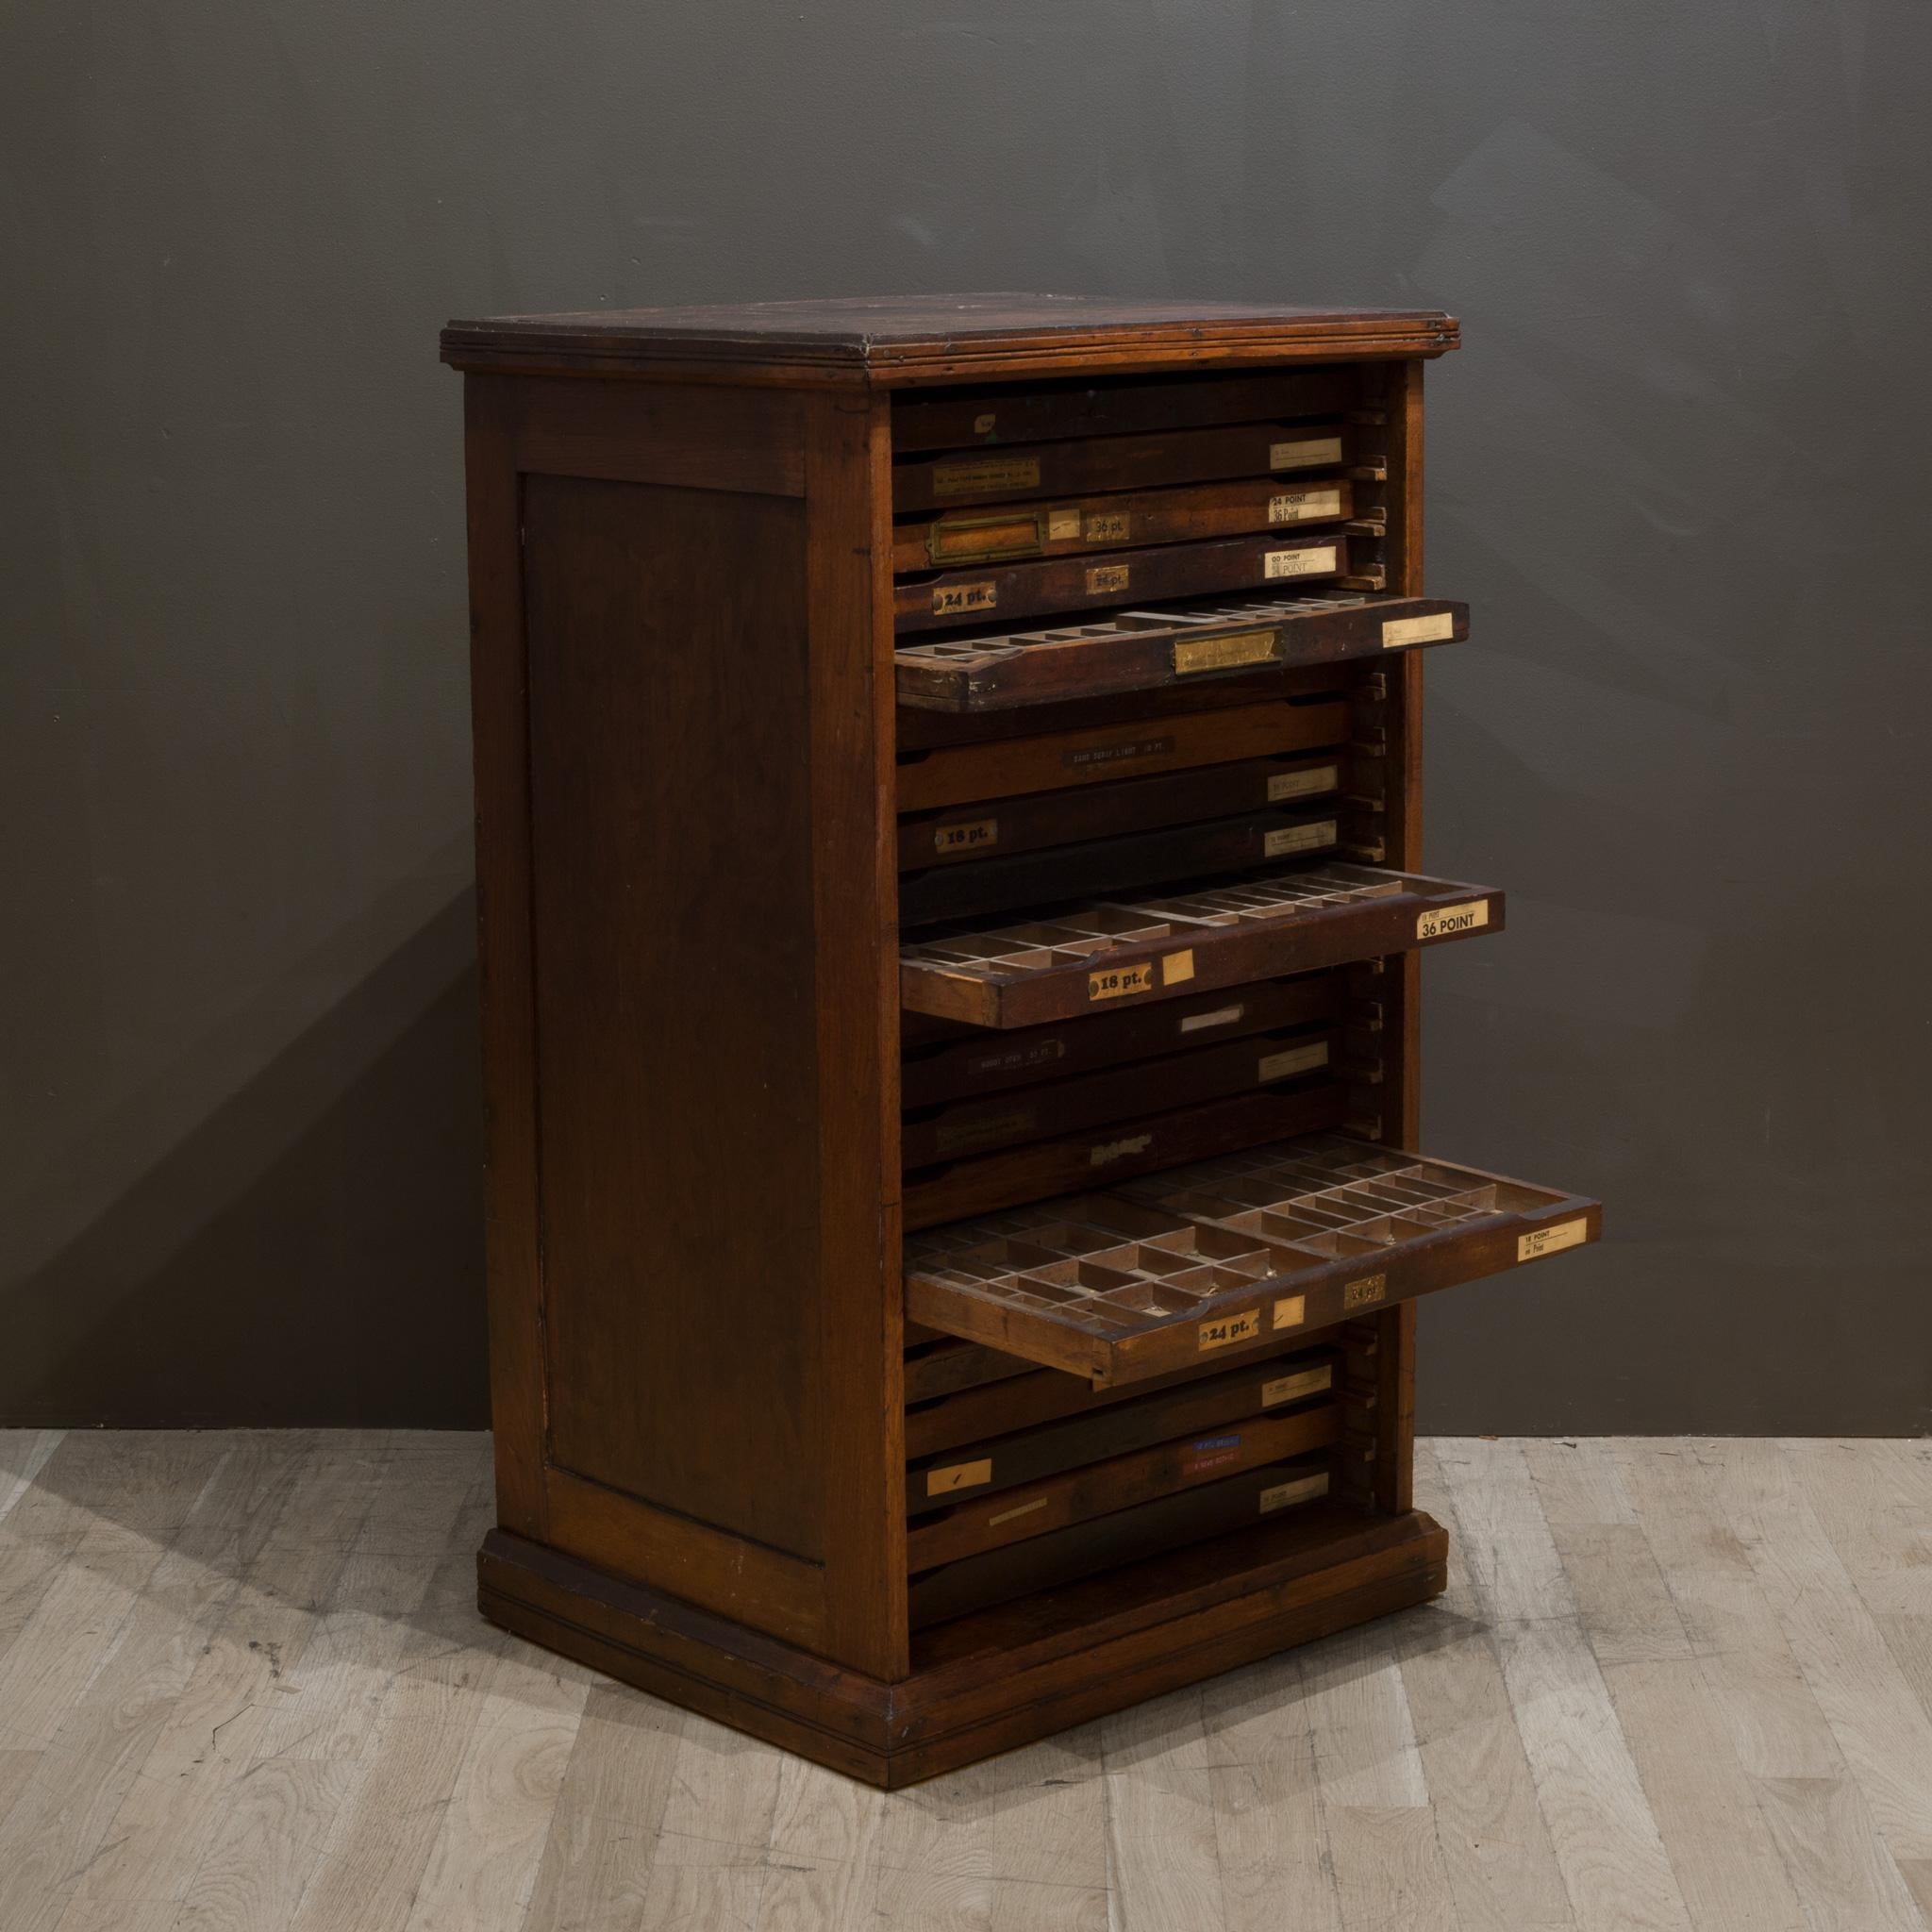 Wood Antique Typesetter's Cabinet, c.1900-1920